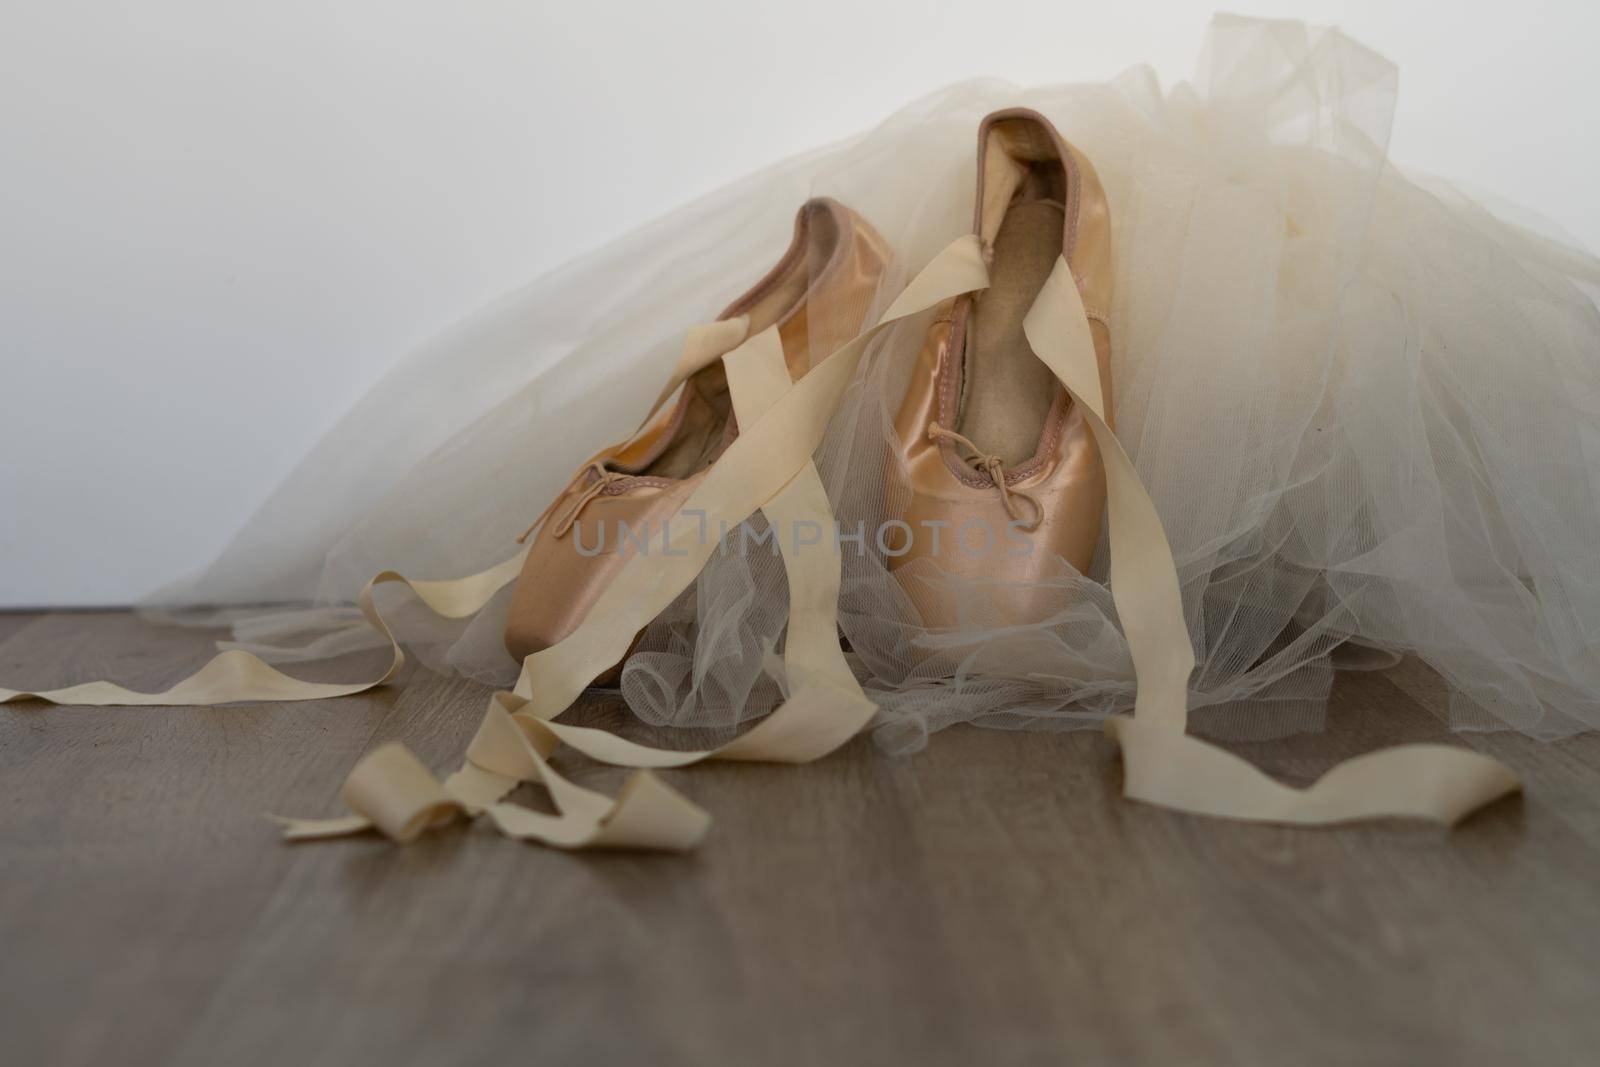 ballet slippers white background by joseantona